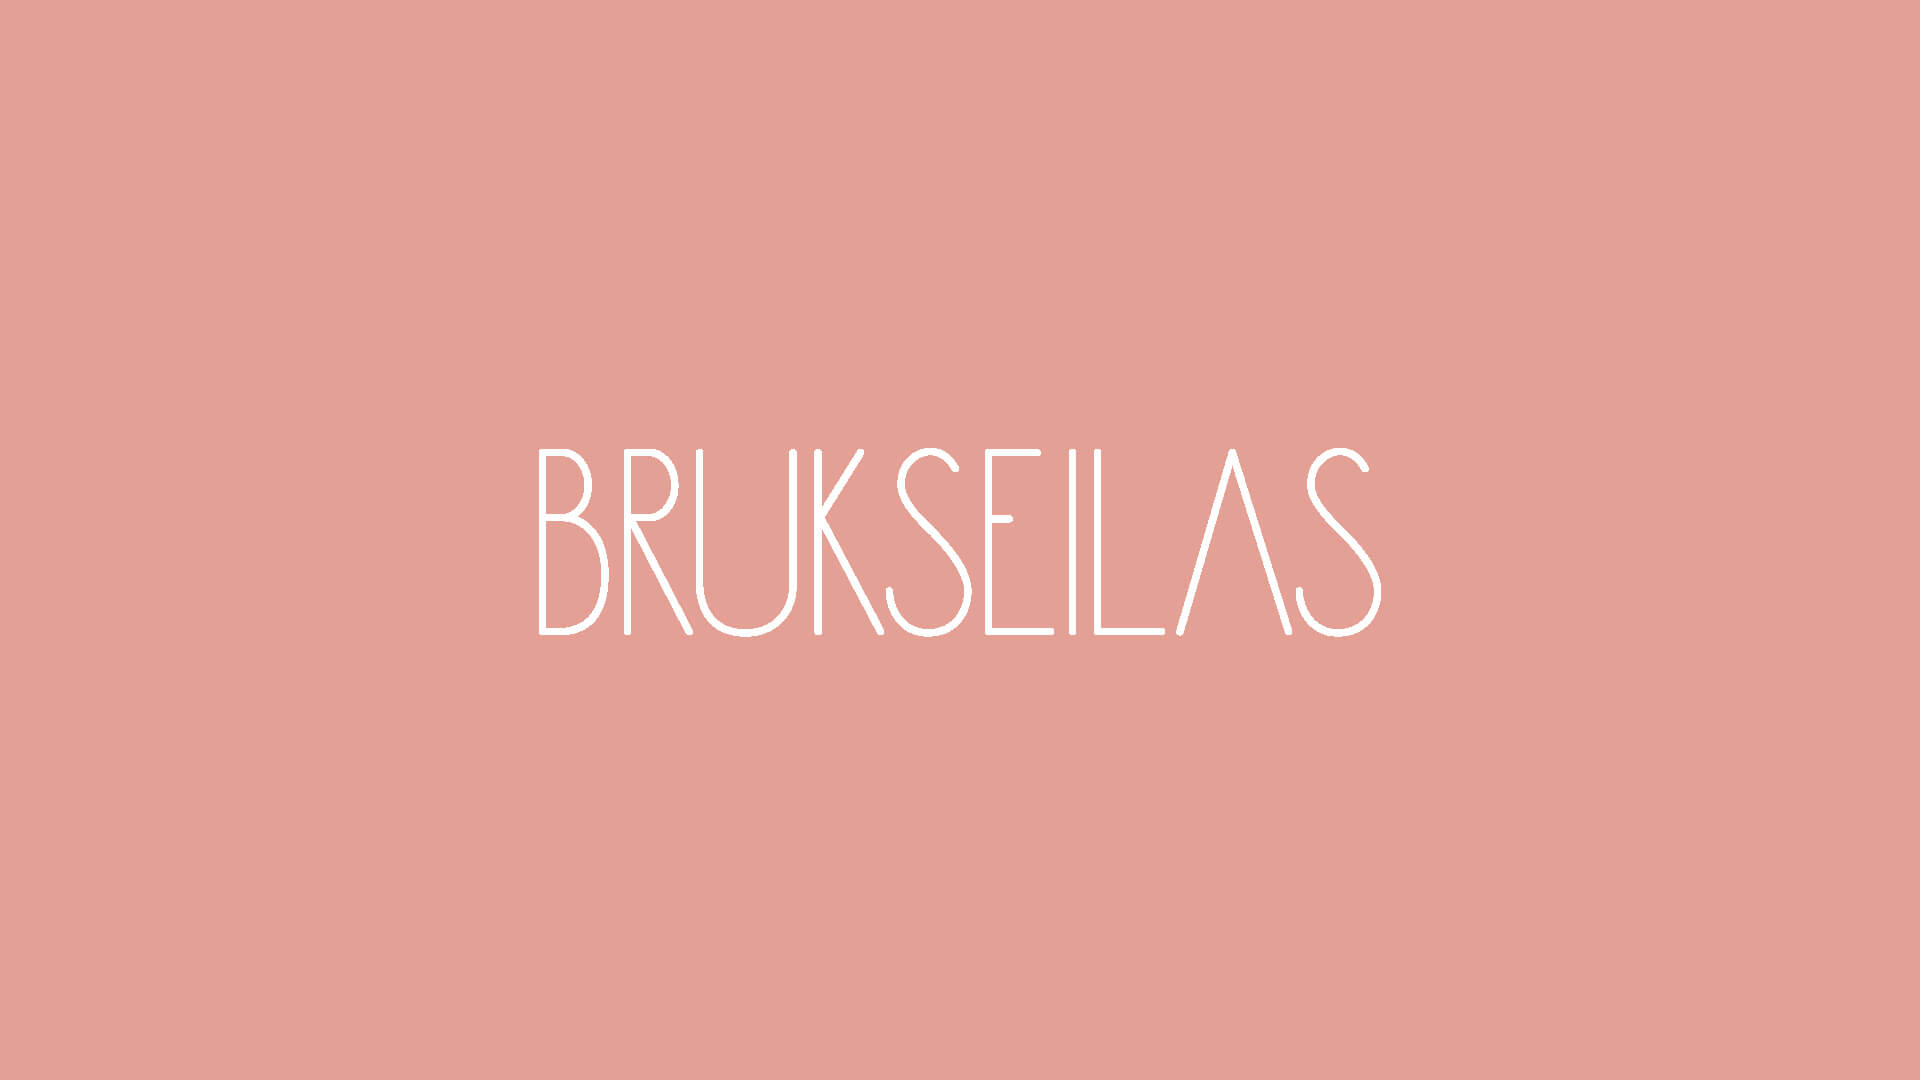 White Brukseilas Logo on a pink Background